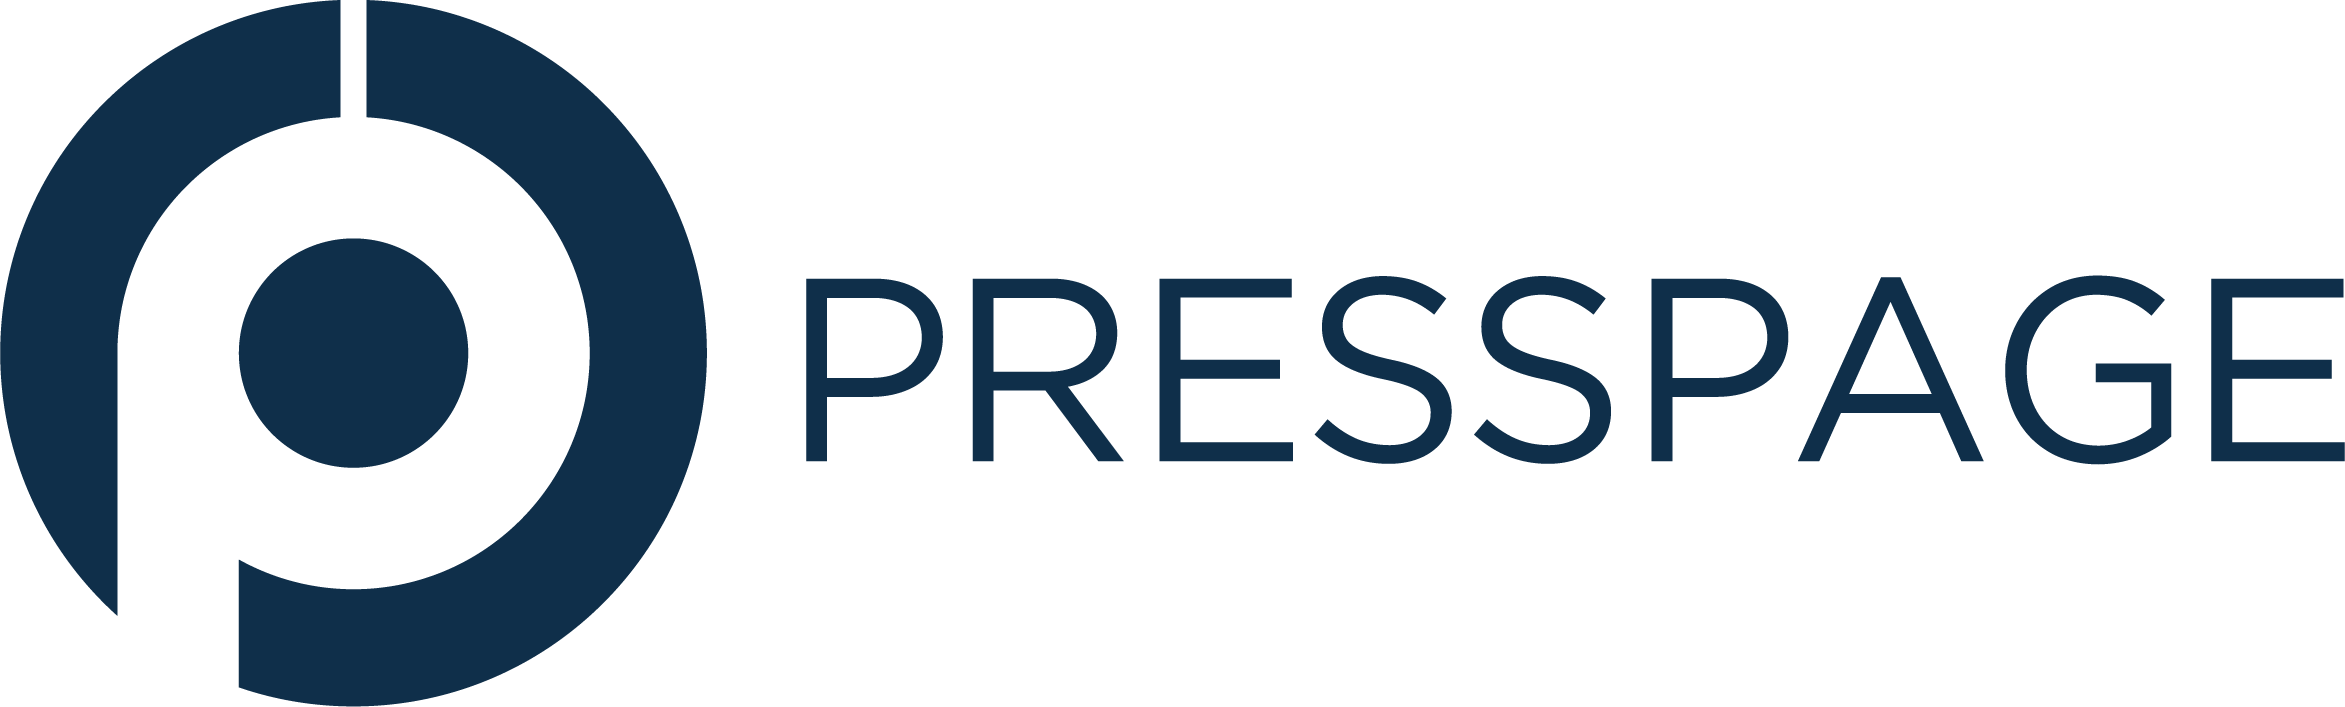 Presspage Logo